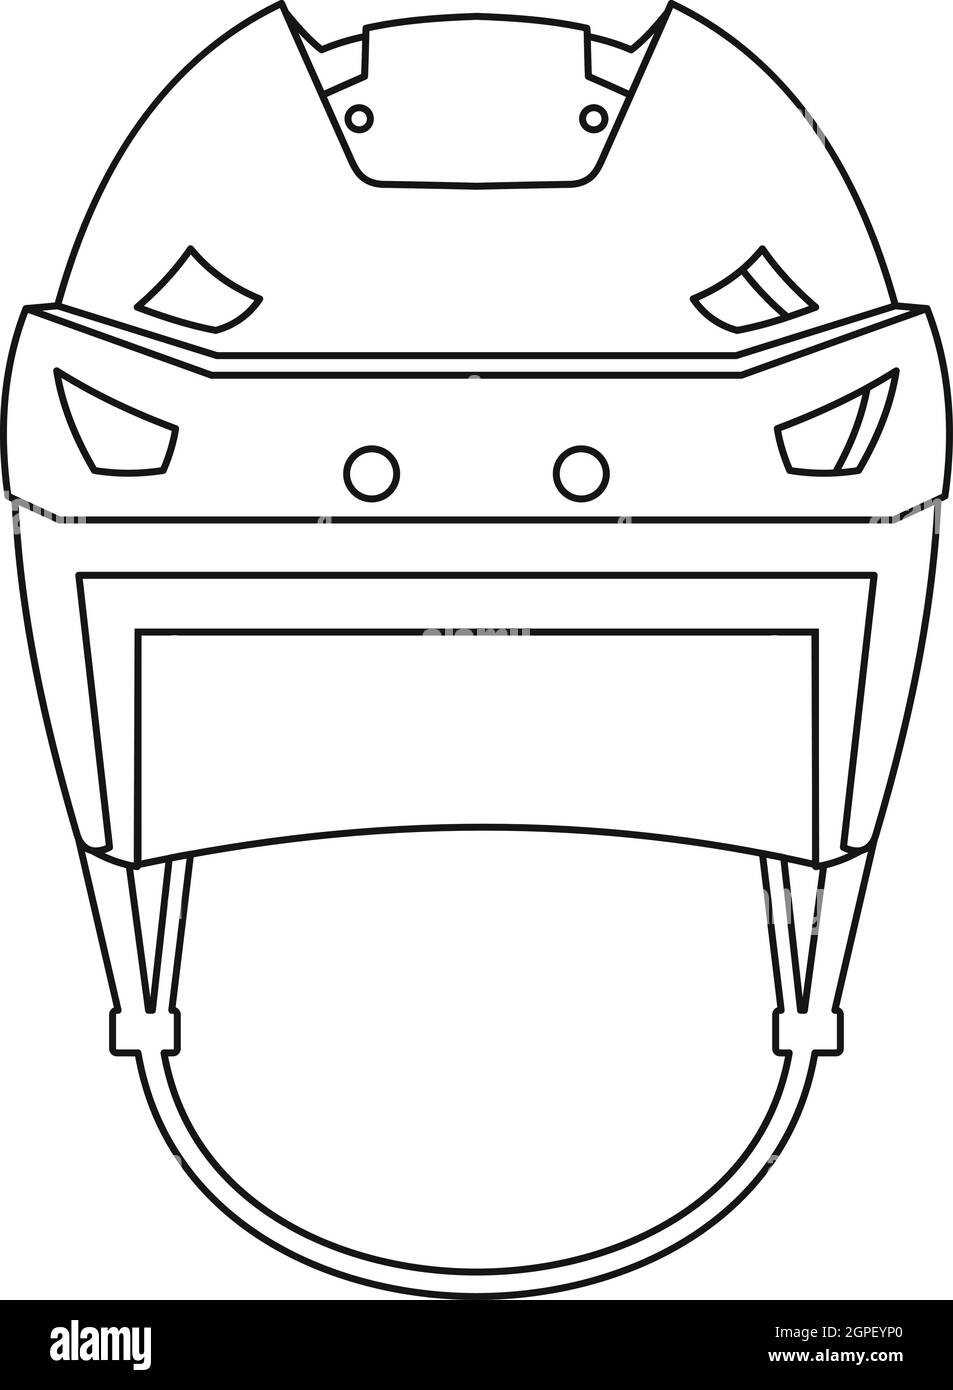 Ice hockey helmet Banque d'images vectorielles - Alamy